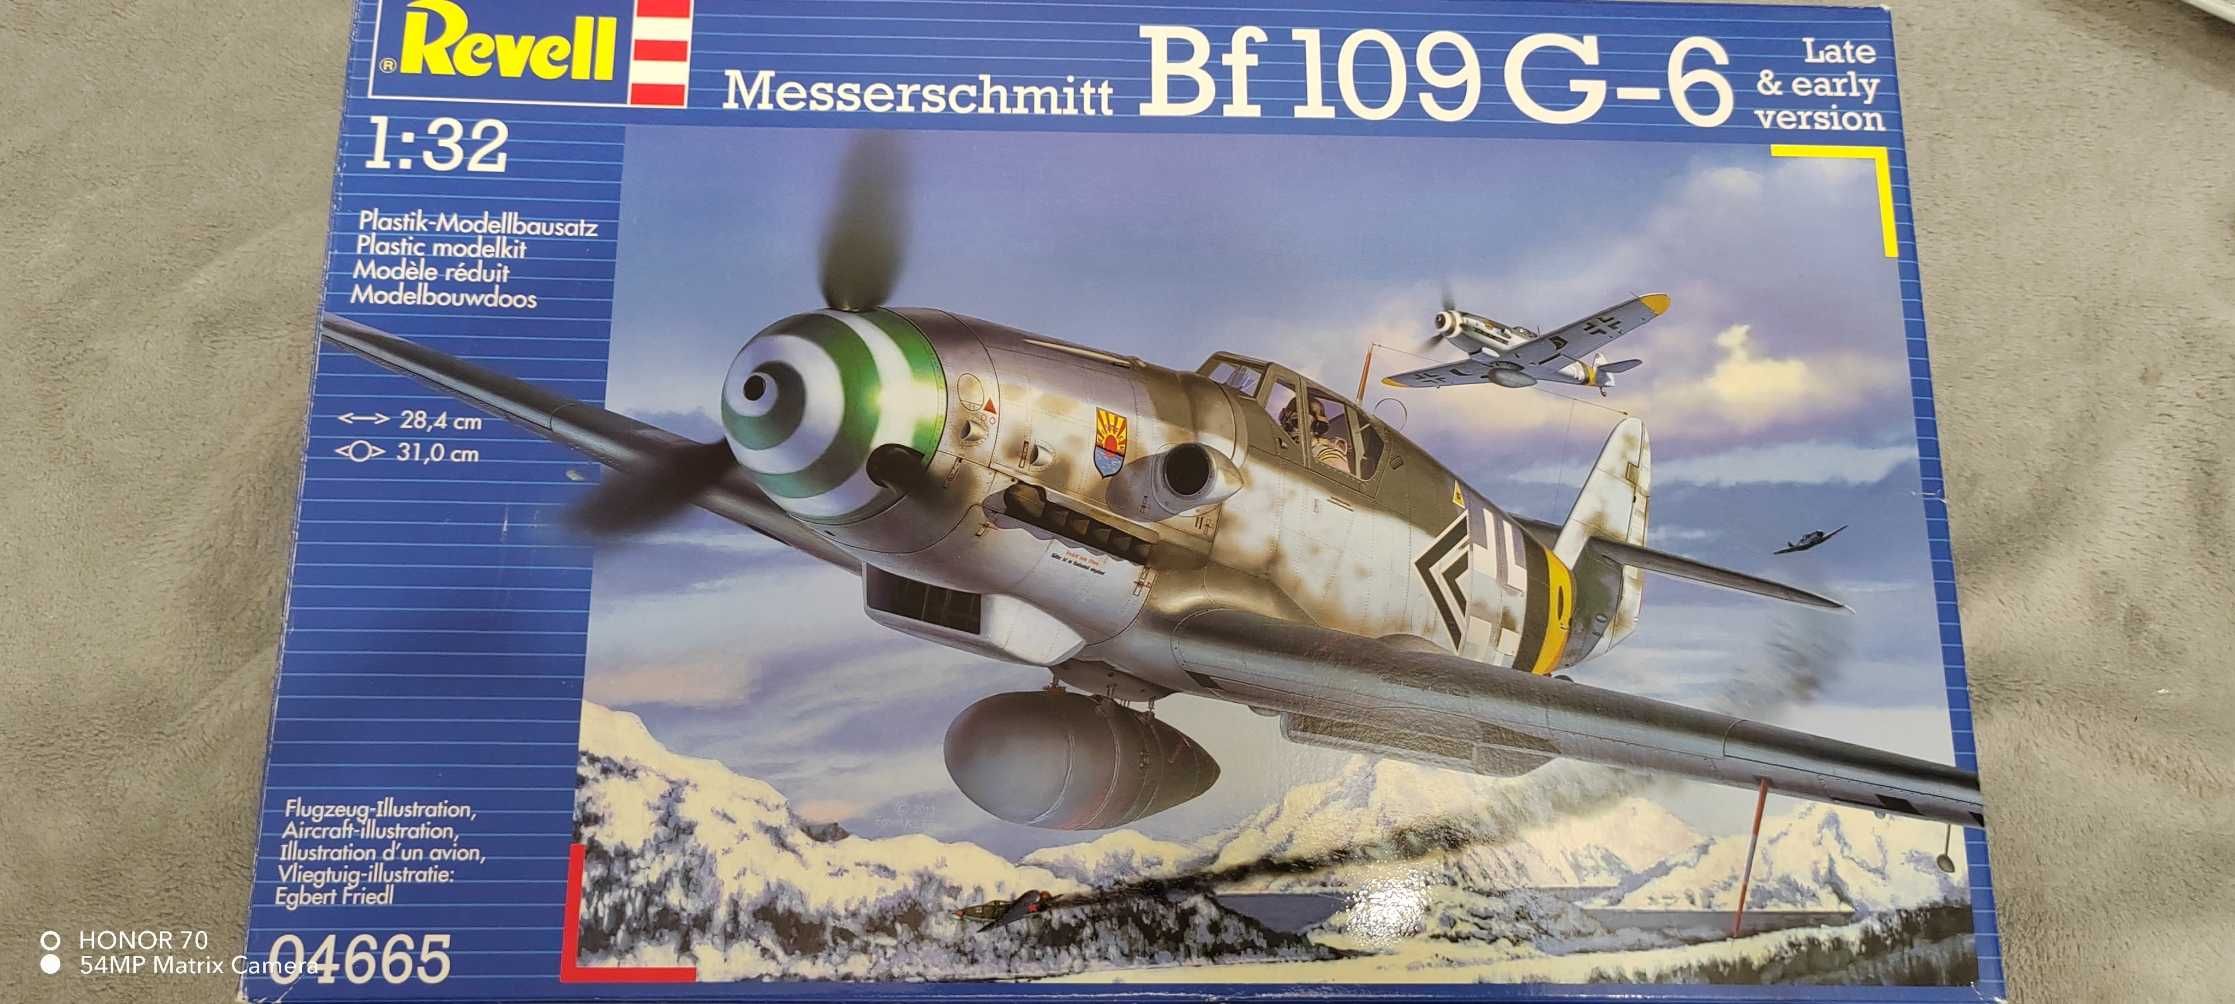 Revell model samolotu Messerschmitt Bf 109 G-6 skala 1:32